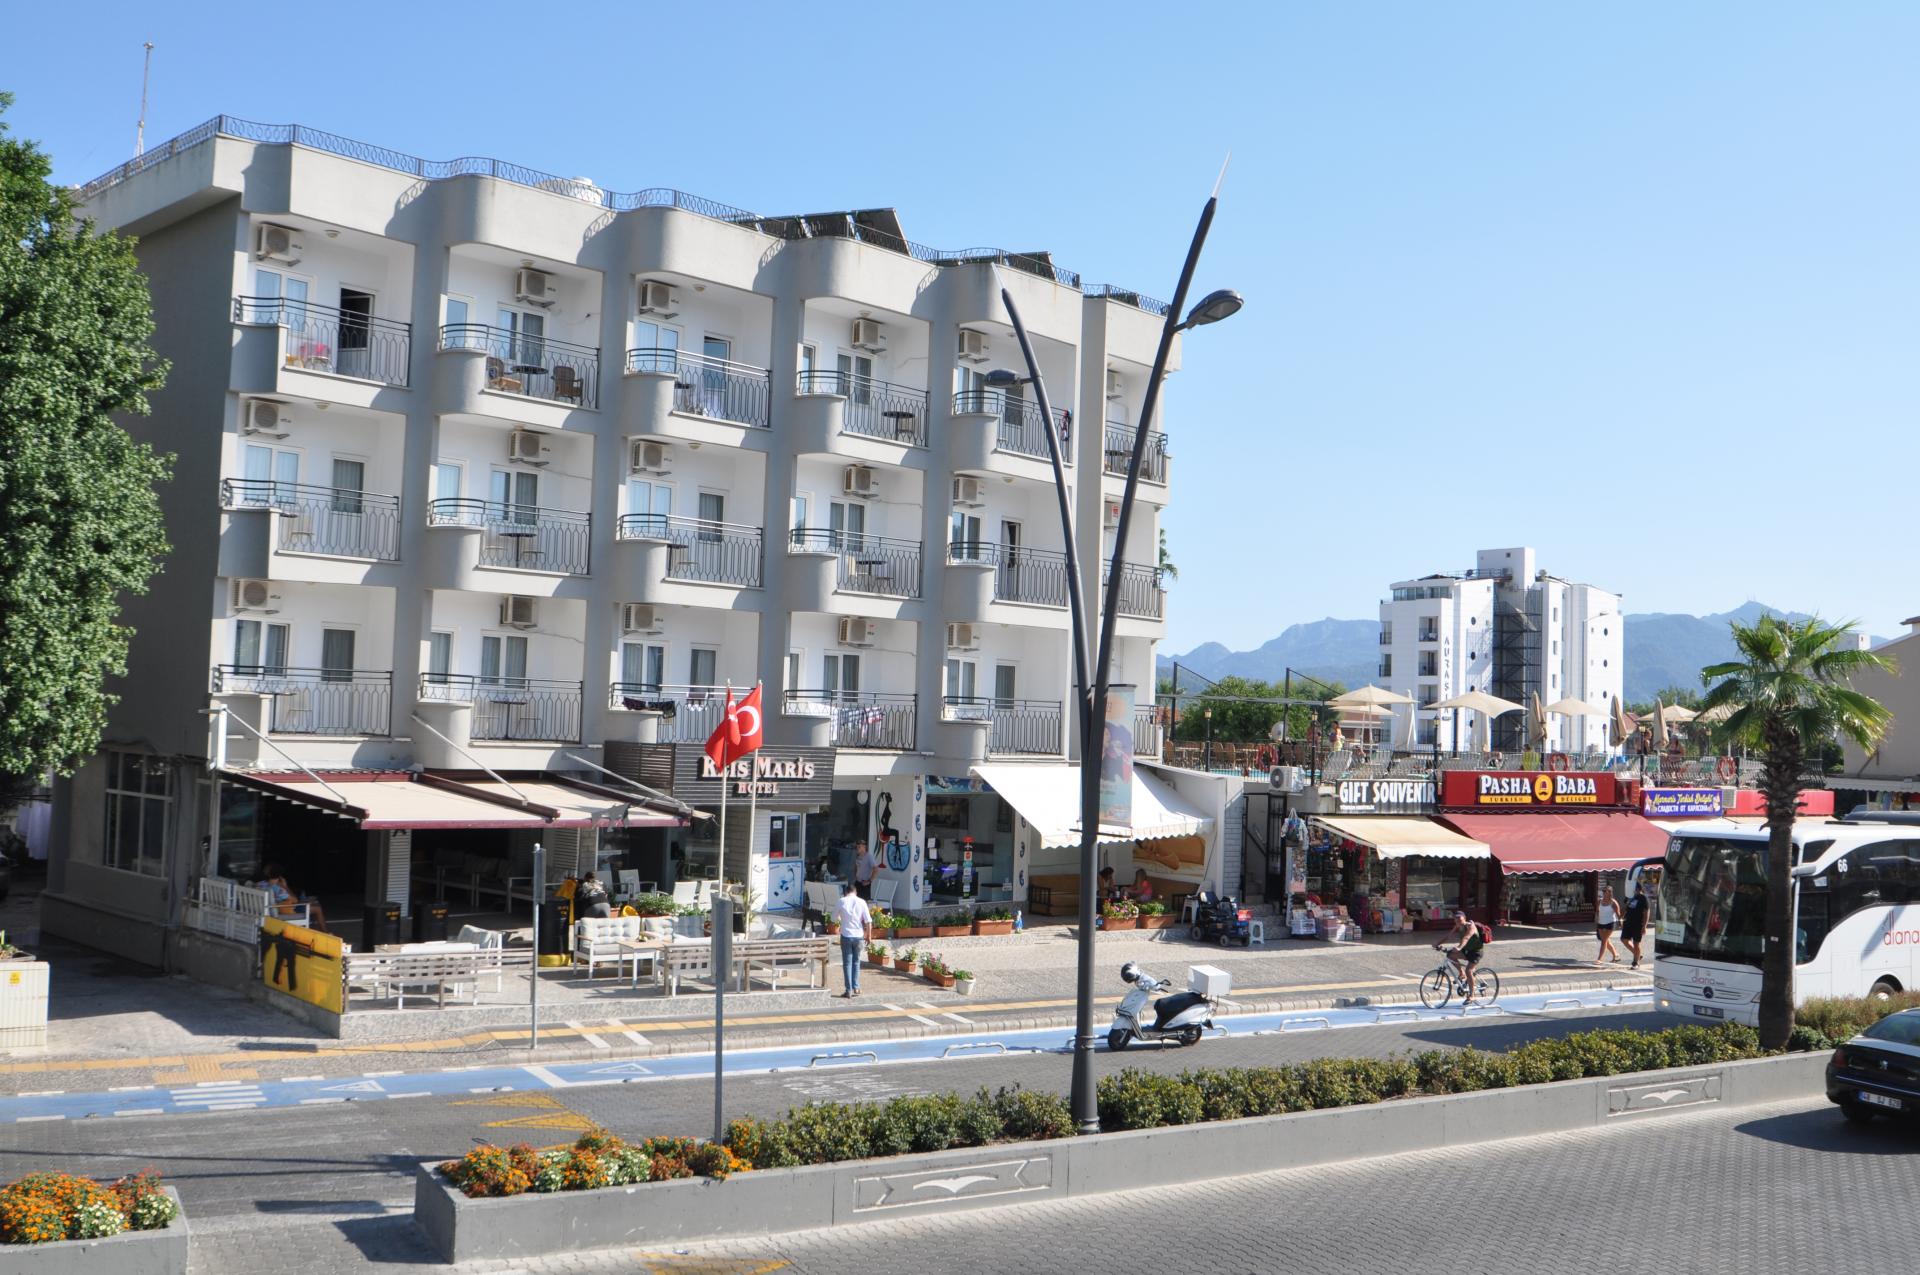 Hotel Reis Maris - Turcja